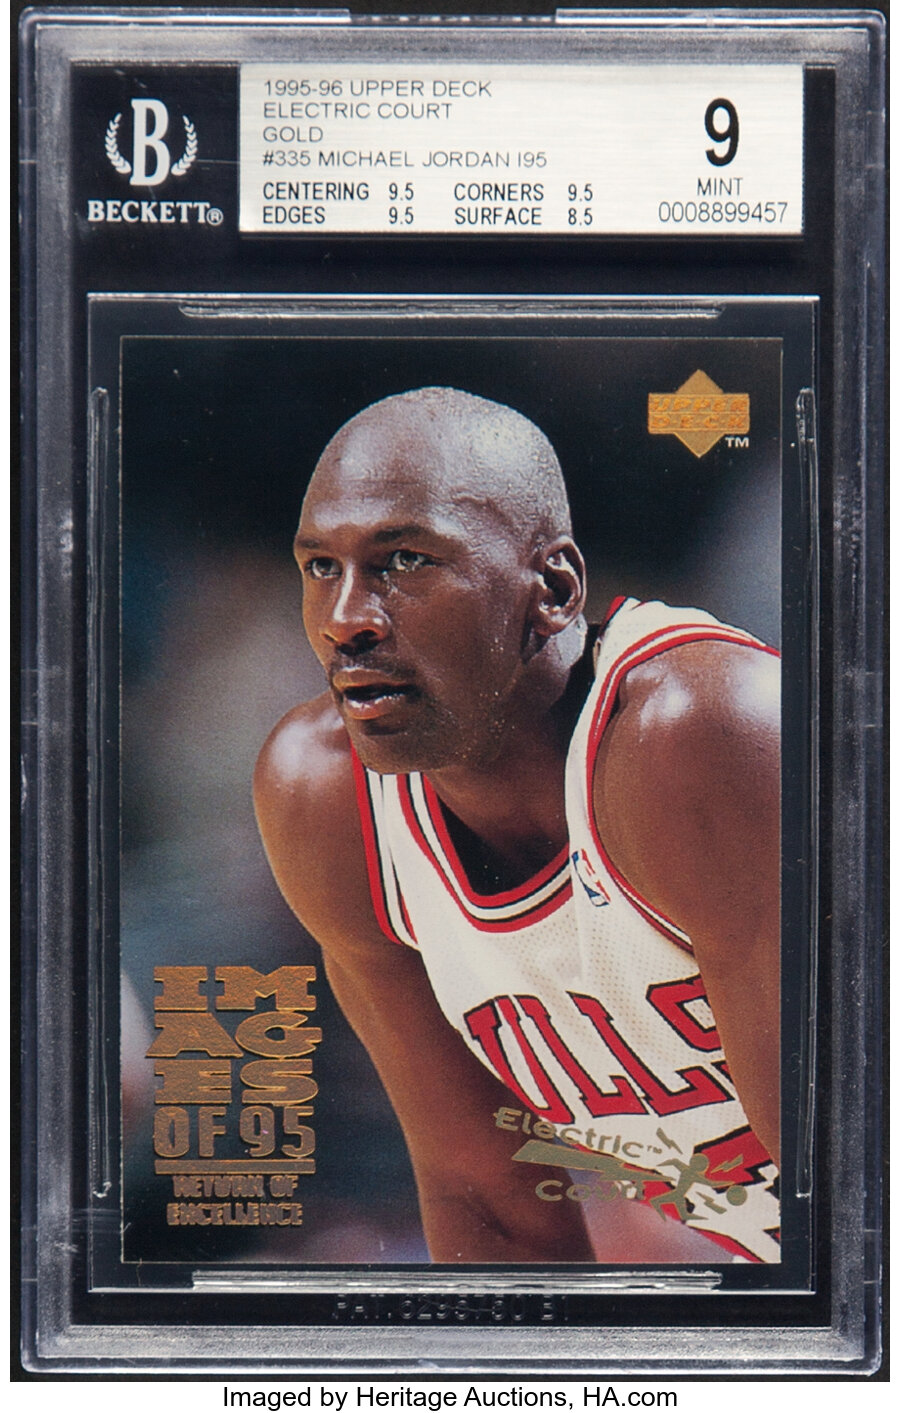 1995 Upper Deck Michael Jordan (Electric Court - Gold) #335 BGS Mint 9